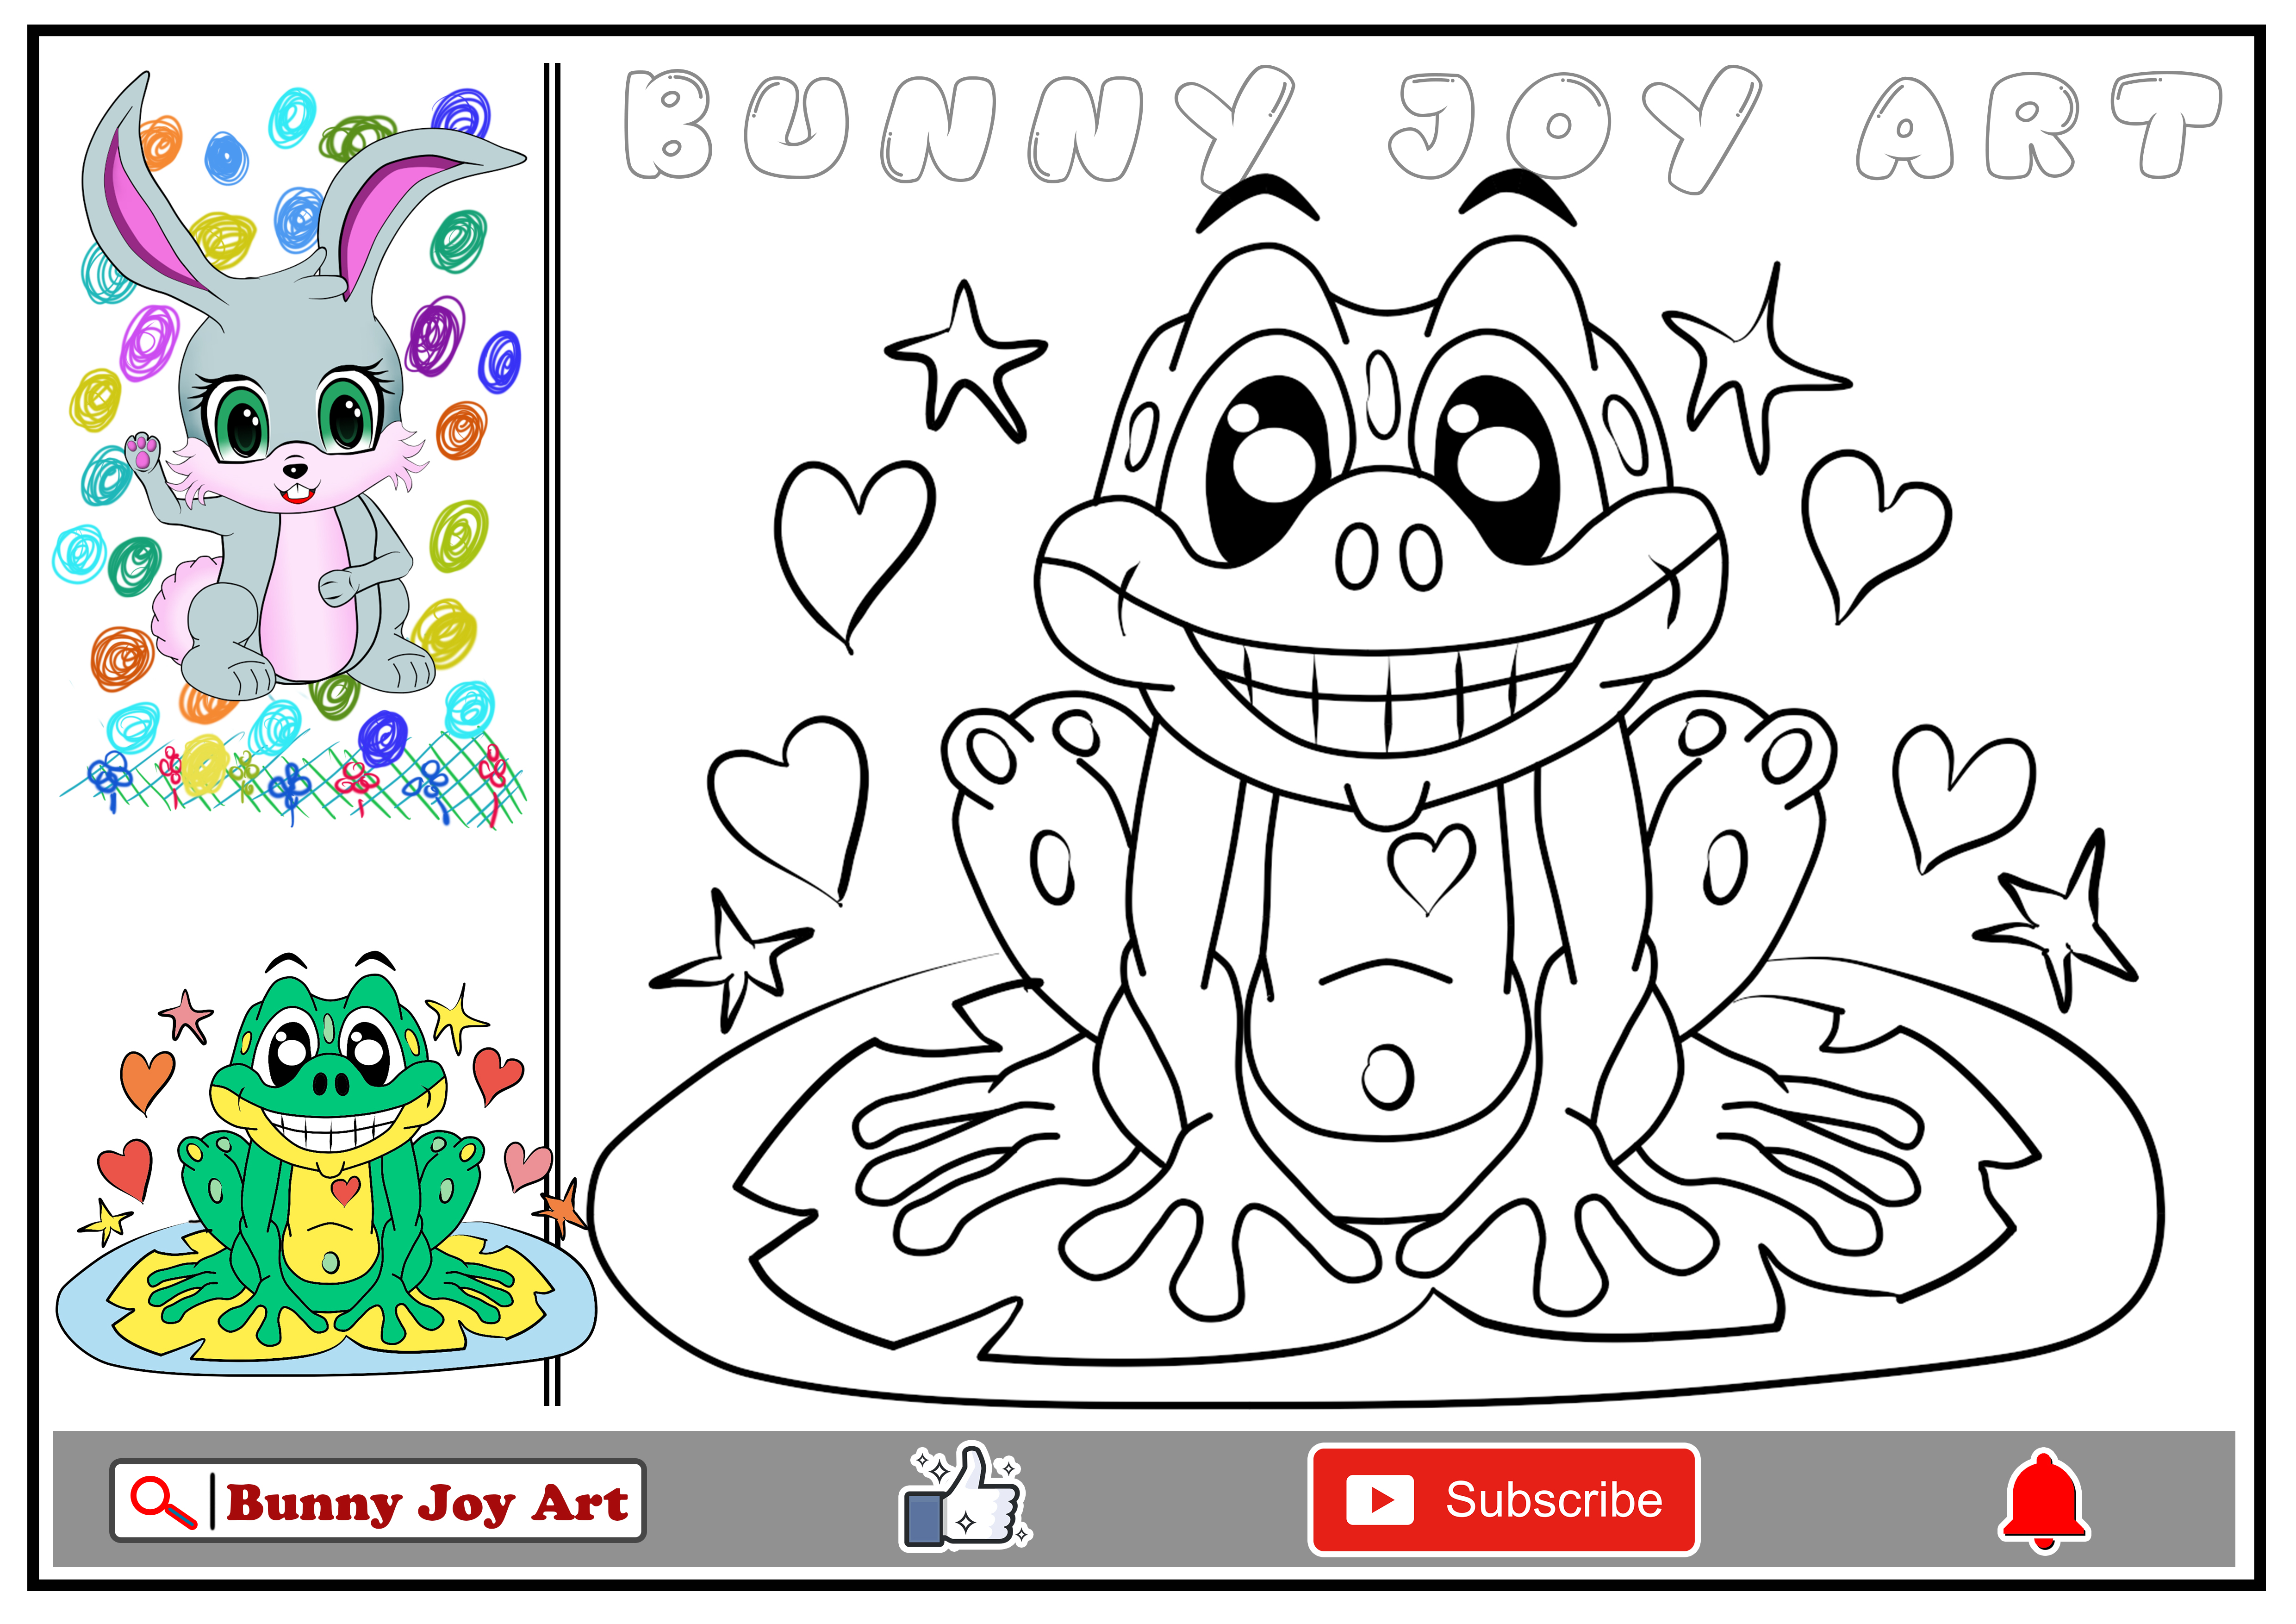 How to draw a Frog easy | Bunny joy art ⭐ - BunnyJoyArt - Drawings